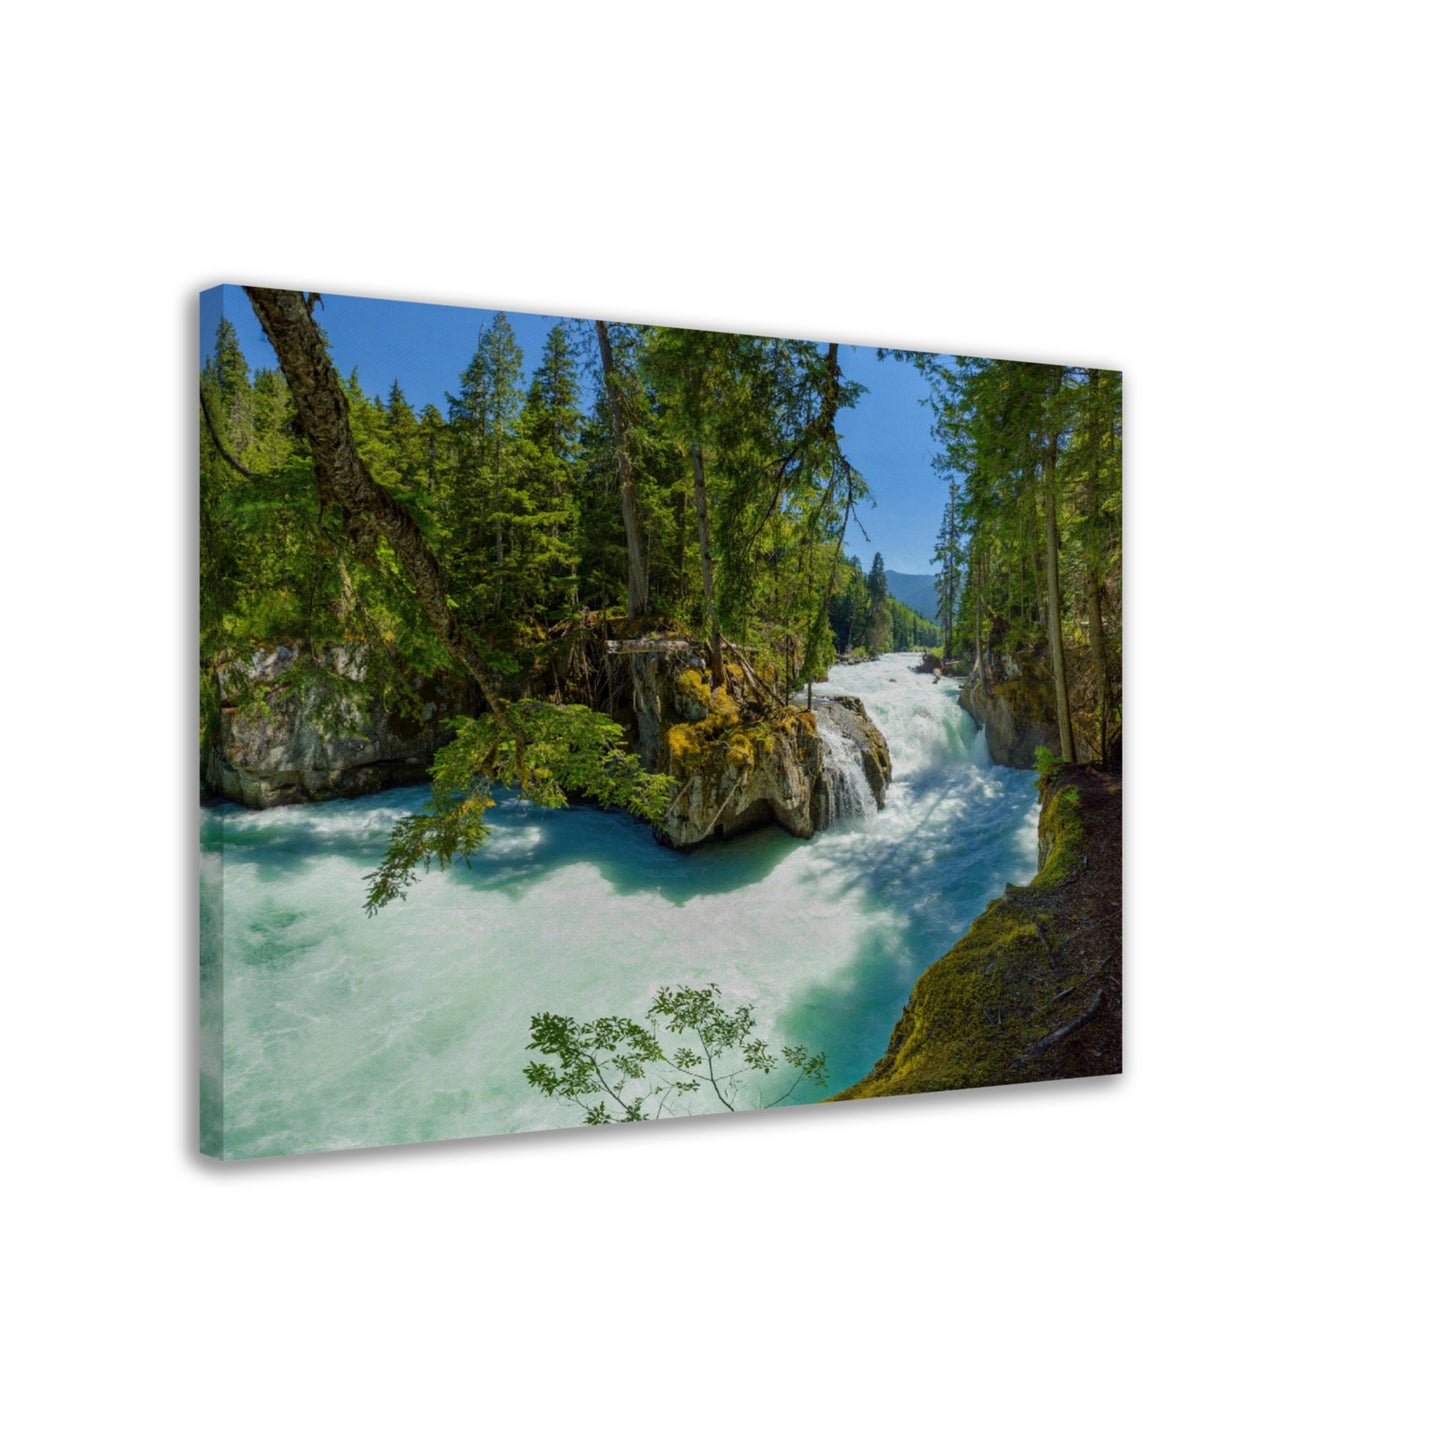 Cheakamus River Waterfall - Whistler - Canadian Wilderness Canvas Print, British Columbia, Canada